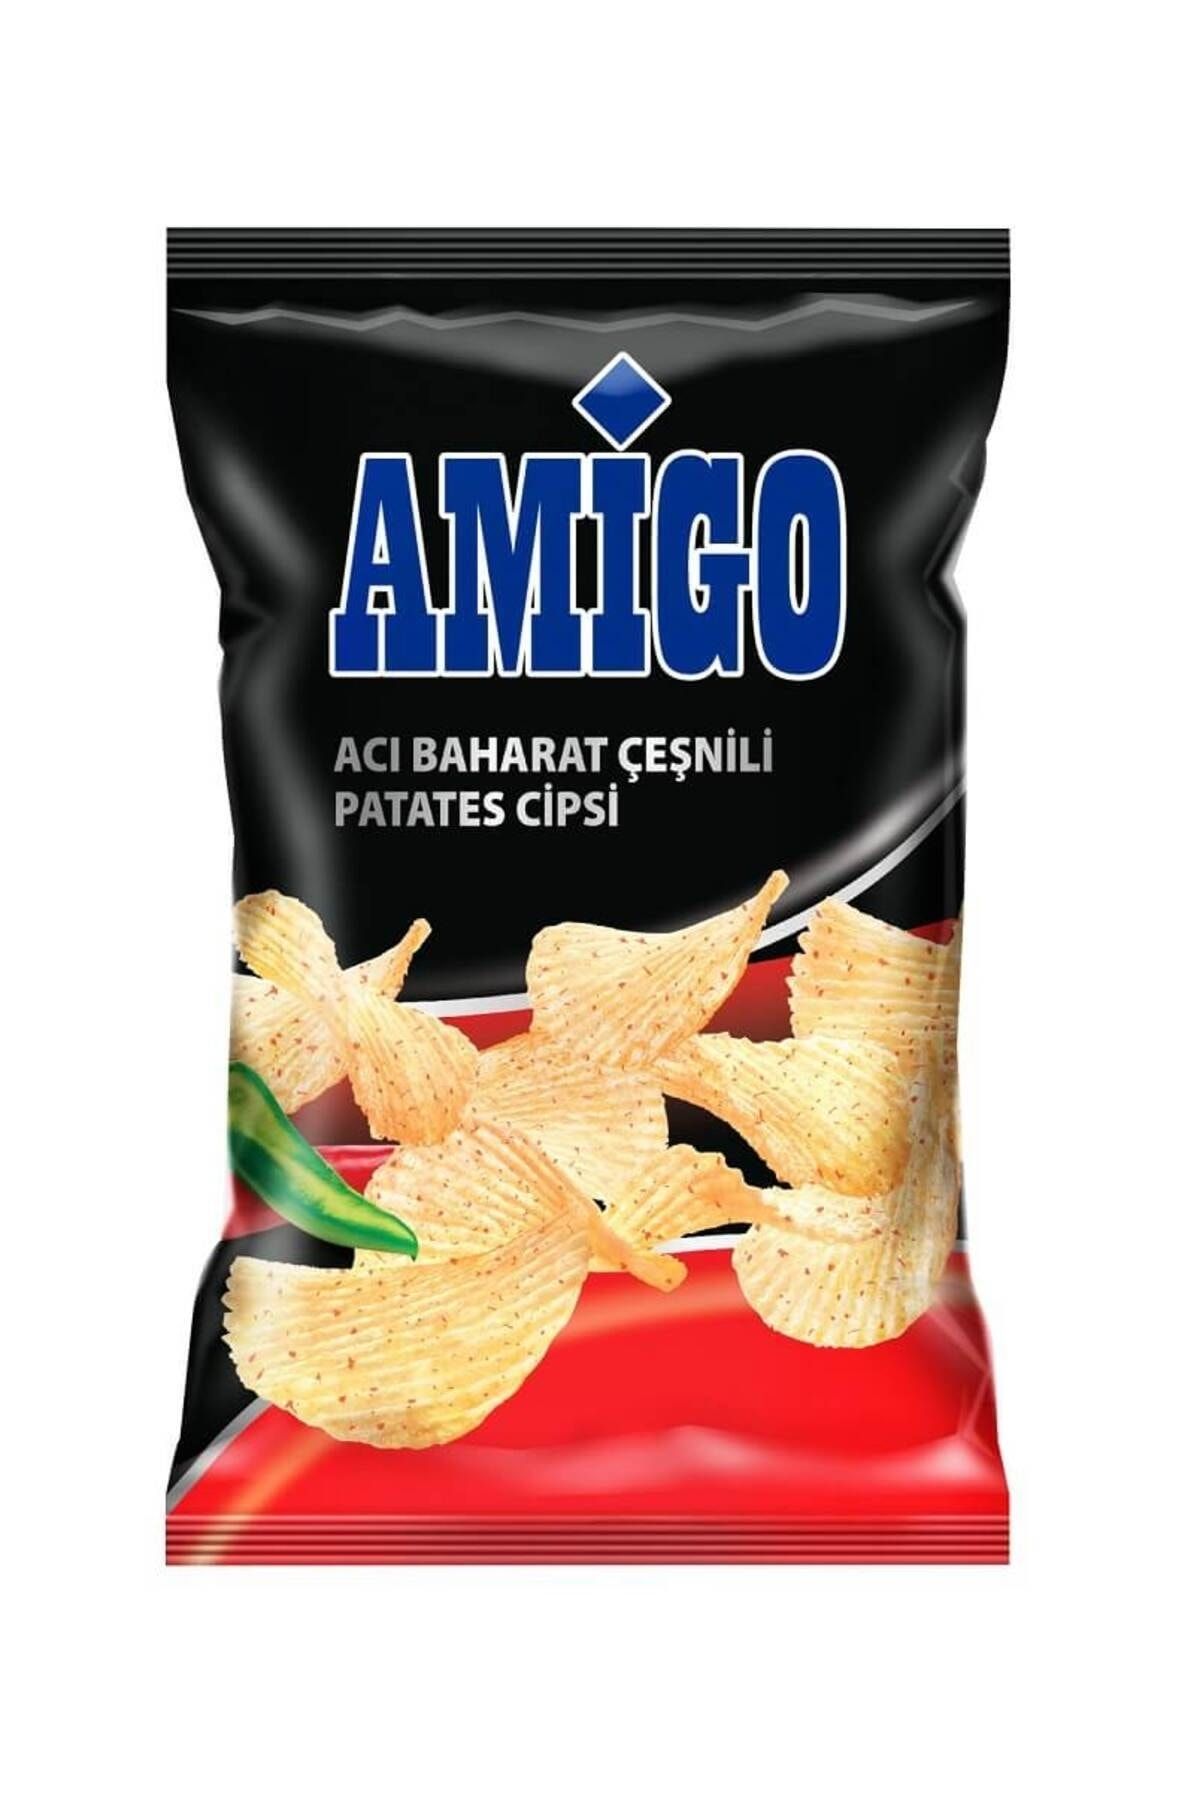 Amigo Acı Baharat Patates Cipsi 135gr*5